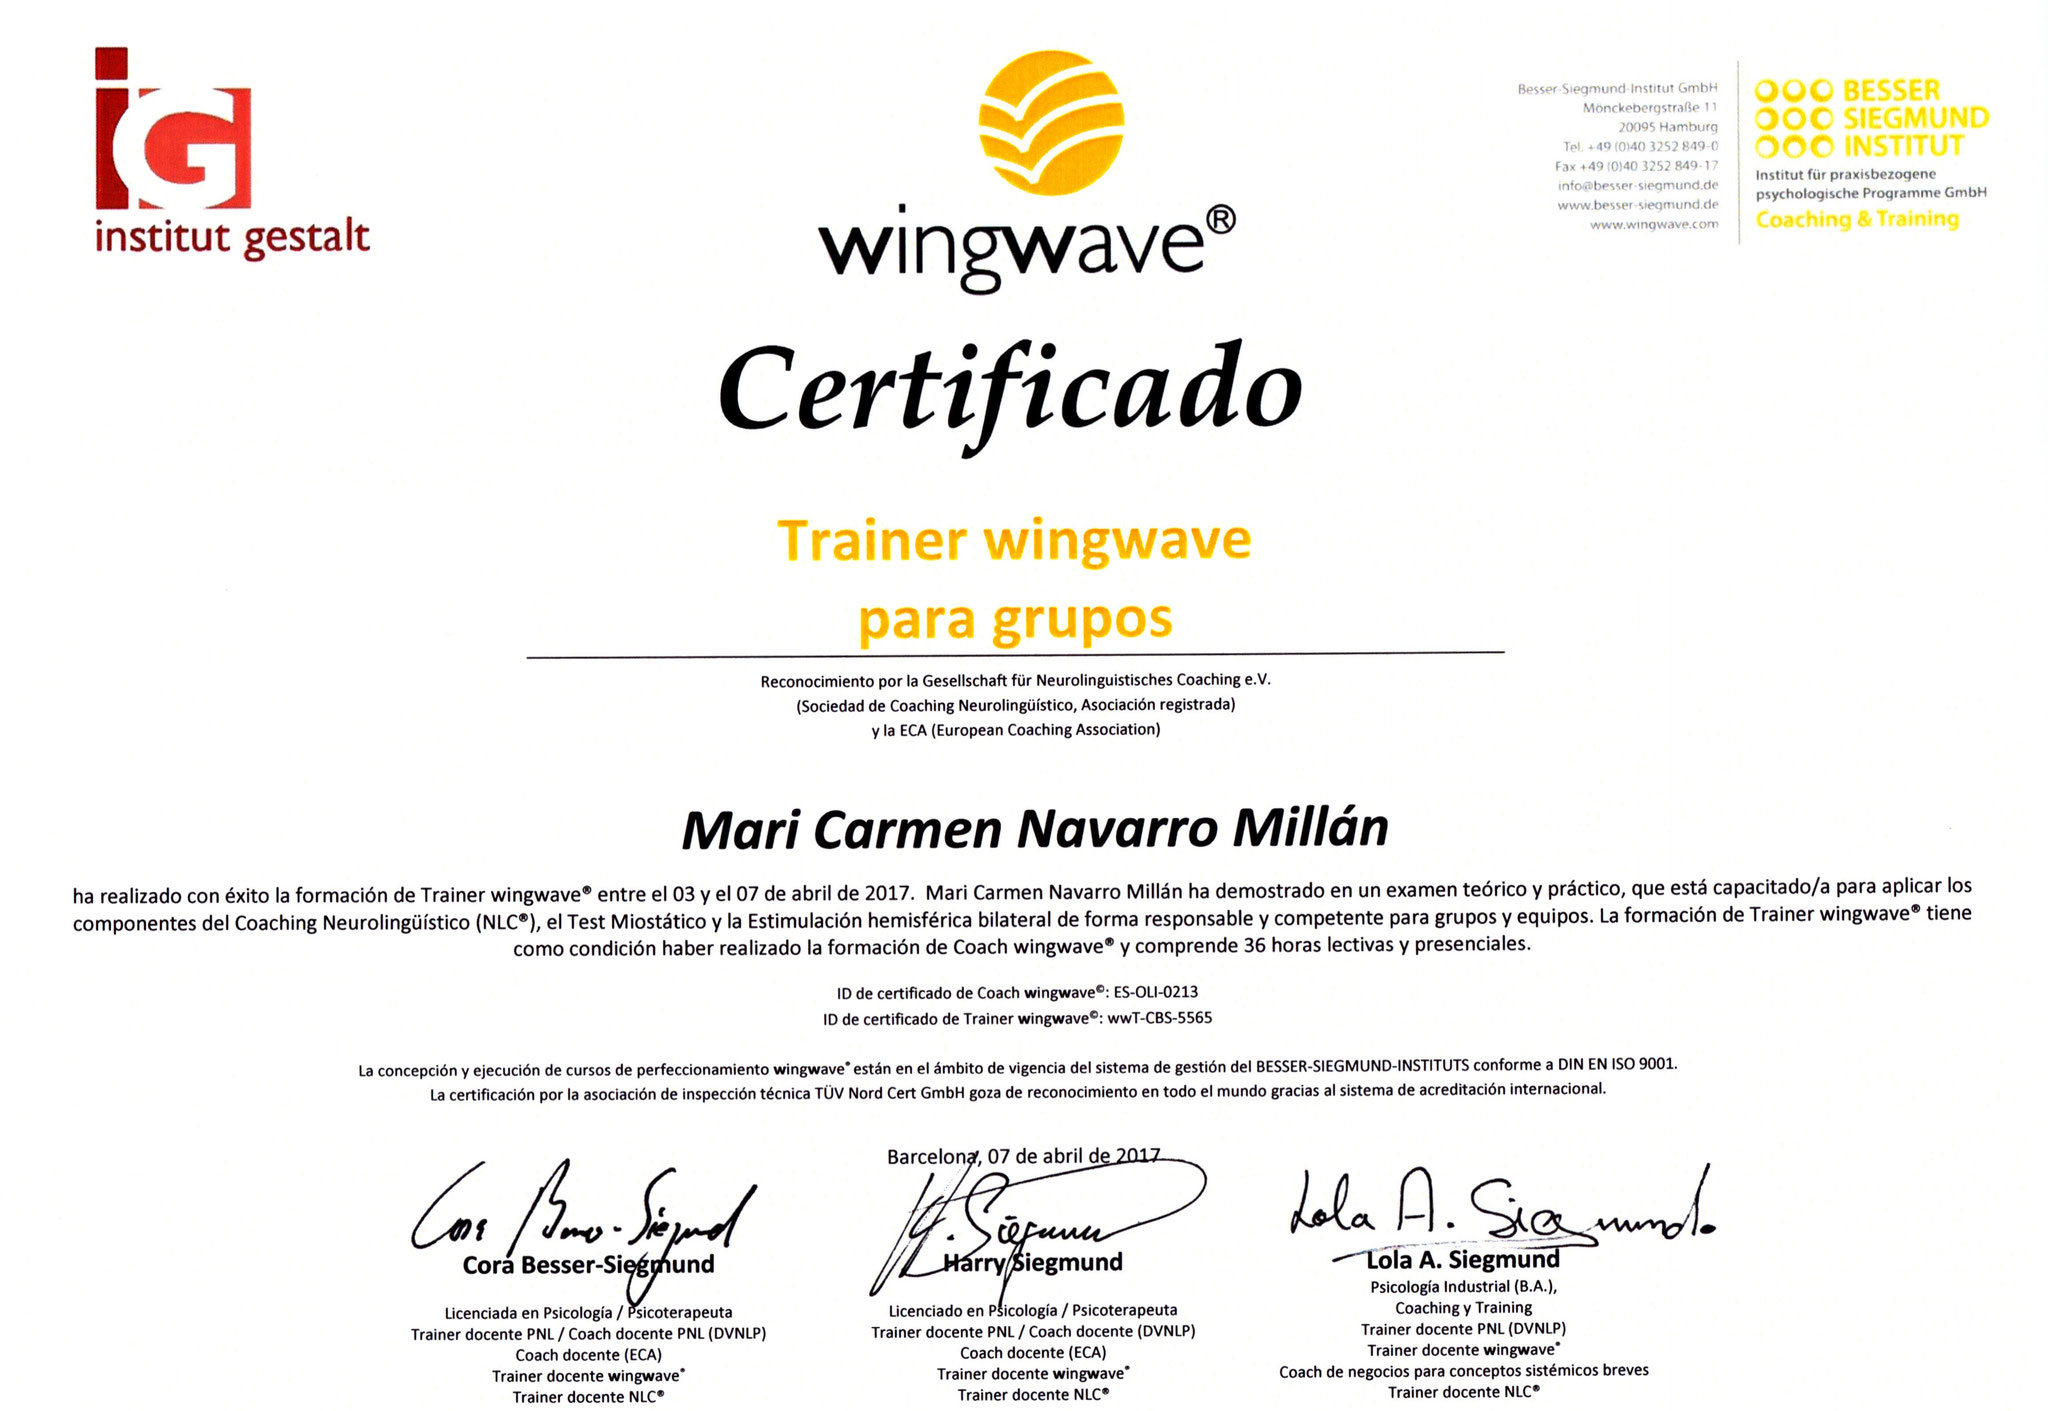 Certificación como Trainer Wingwave® para grupos, 1ª promoción en España